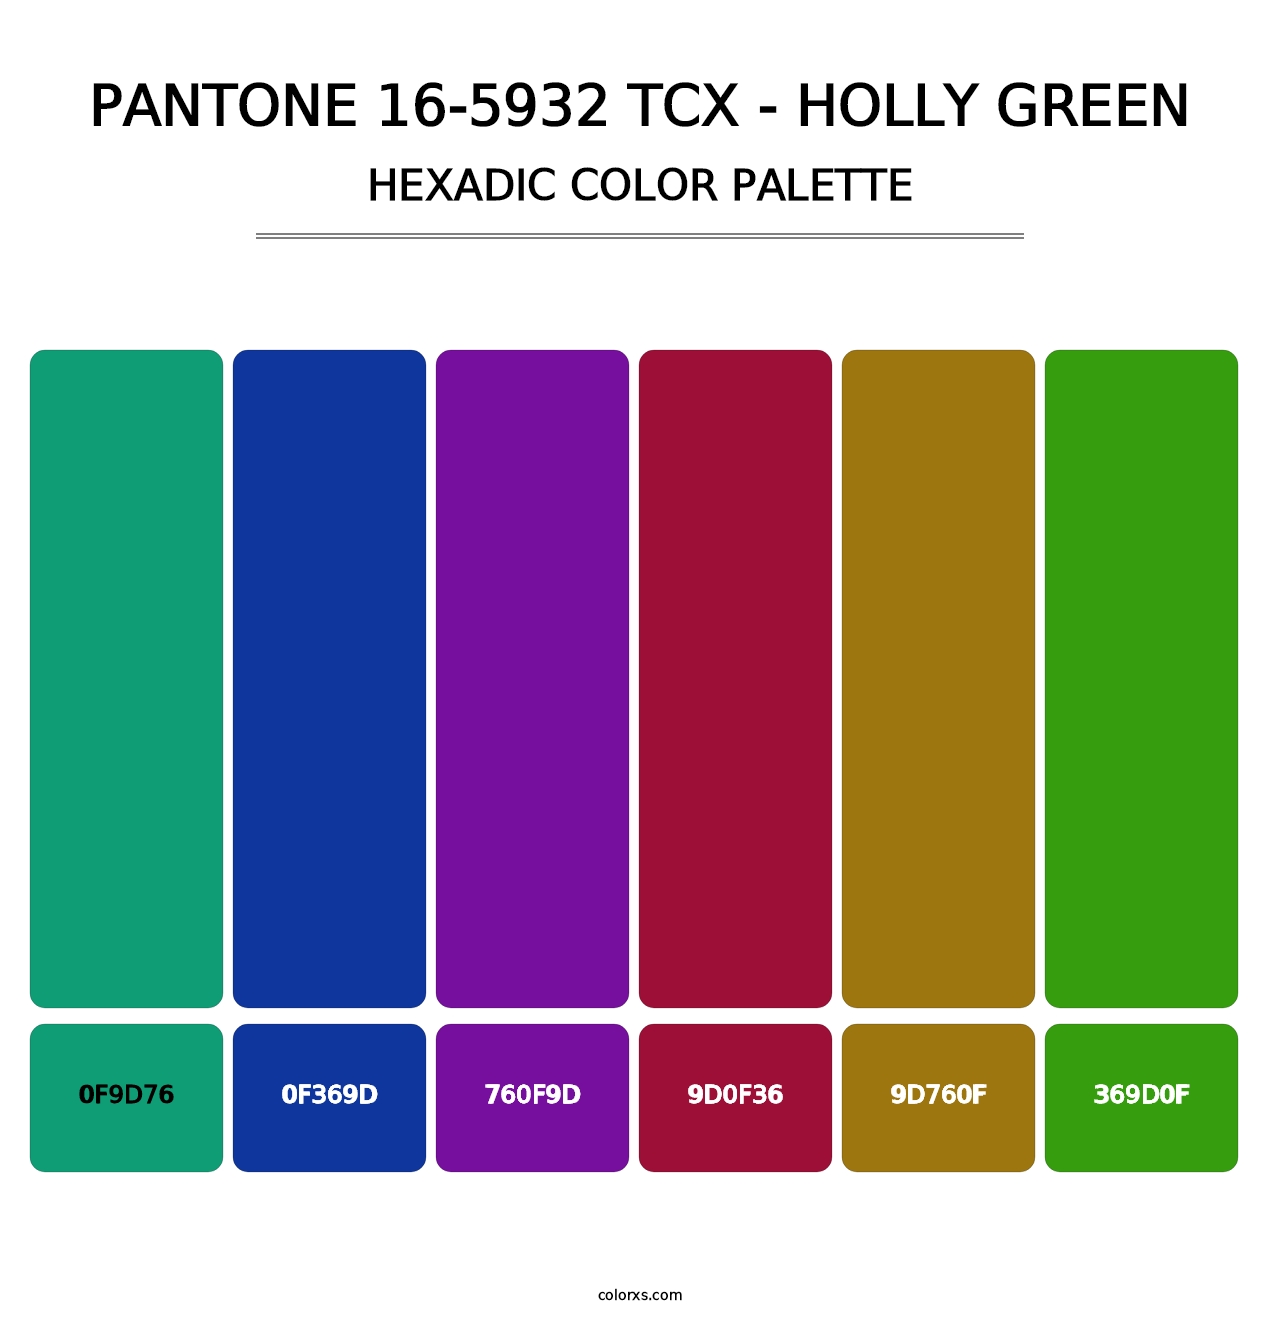 PANTONE 16-5932 TCX - Holly Green - Hexadic Color Palette